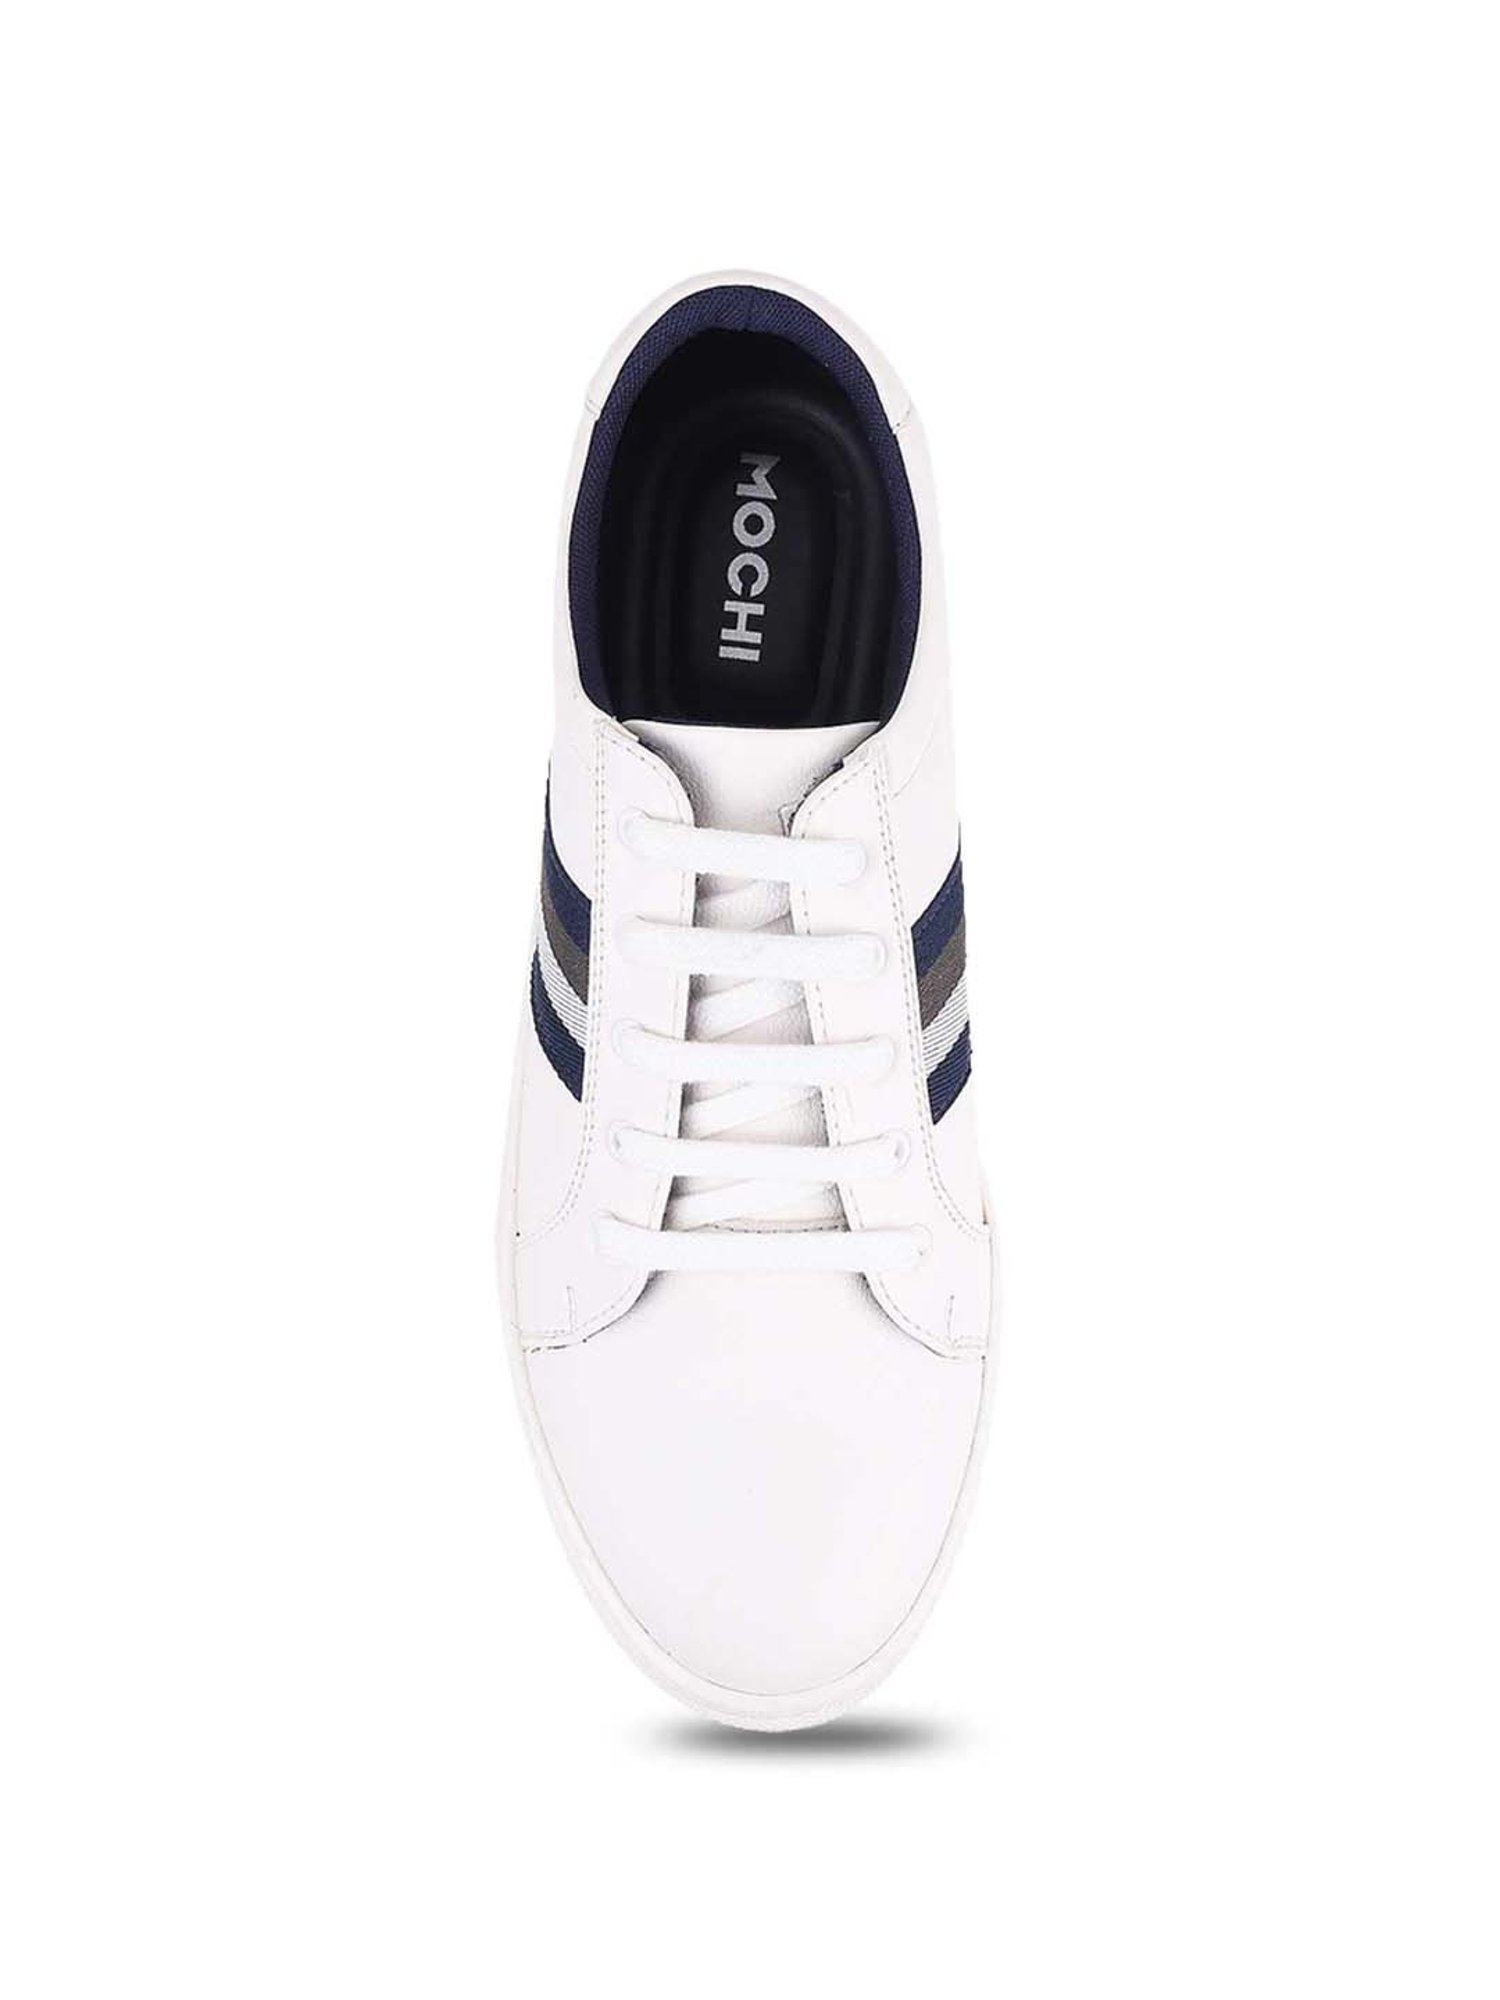 Buy Mochi Boy's White Sneakers-5 Kids UK (38 EU) (46-5133) at Amazon.in